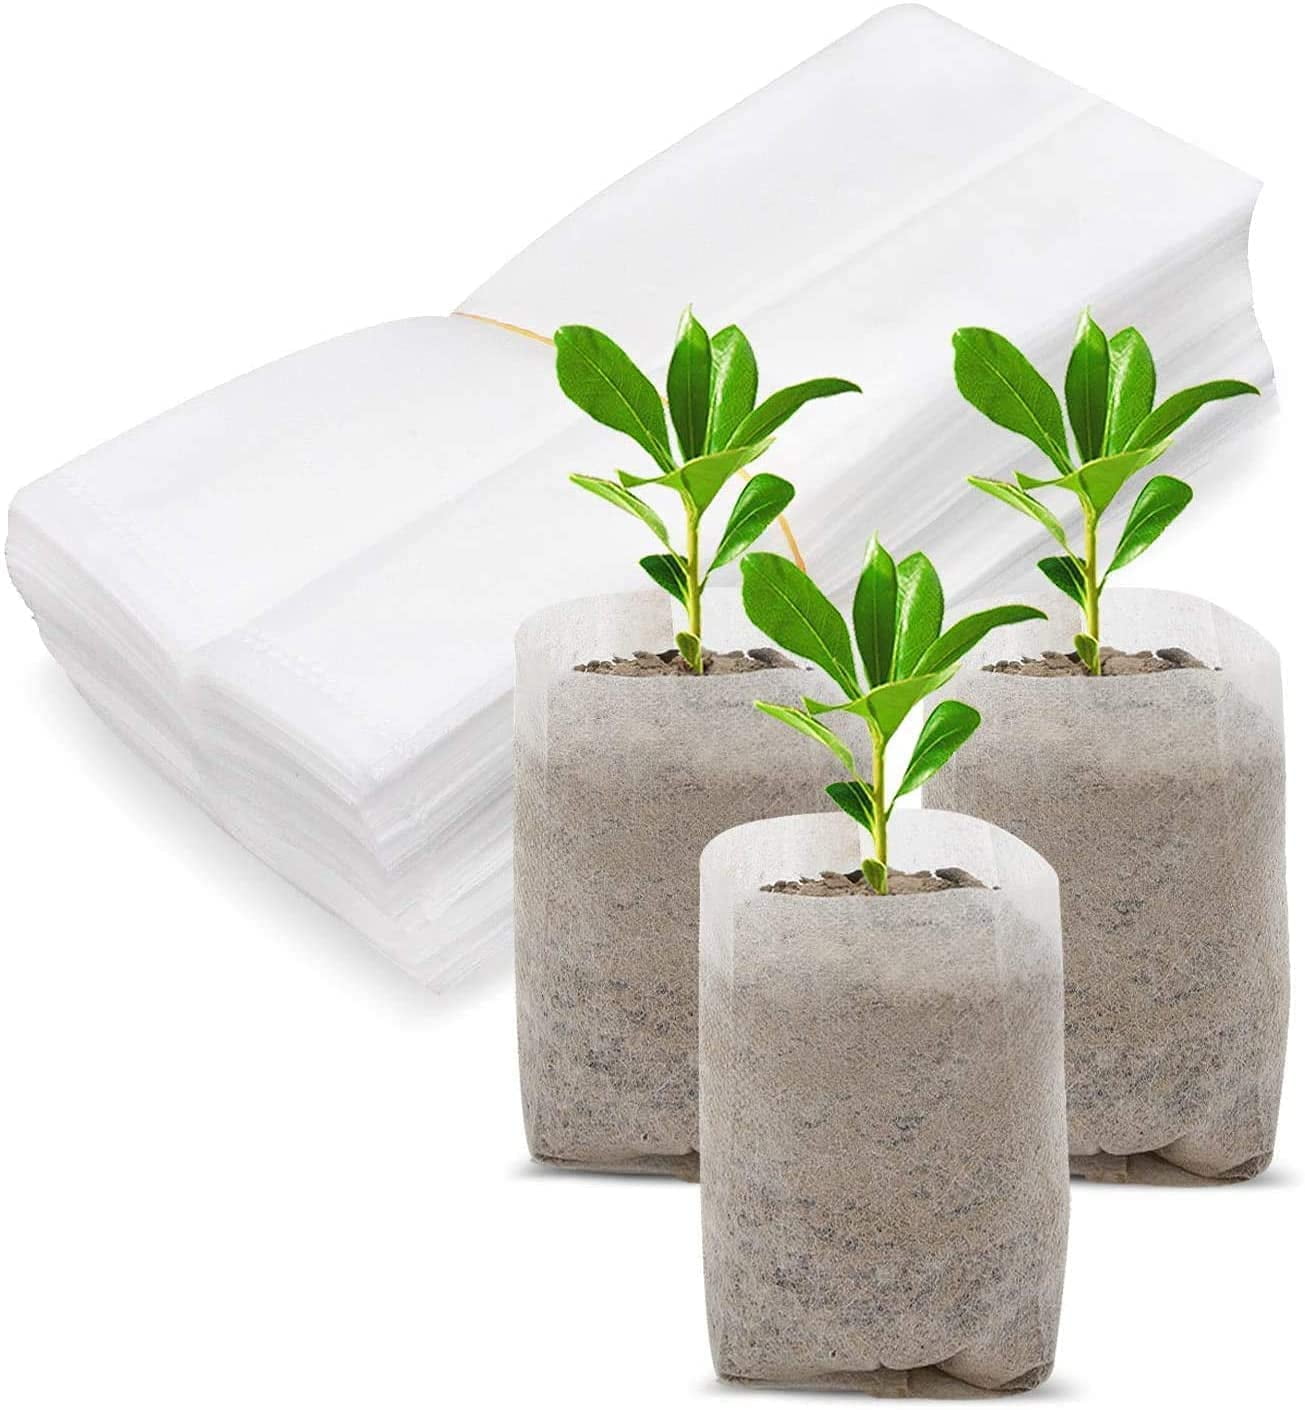 Delxo 400Pcs 4 Size Biodegradable Non-Woven Nursery Bags Plant Grow Bags Fabric Seedling Bags Home Garden Supply 